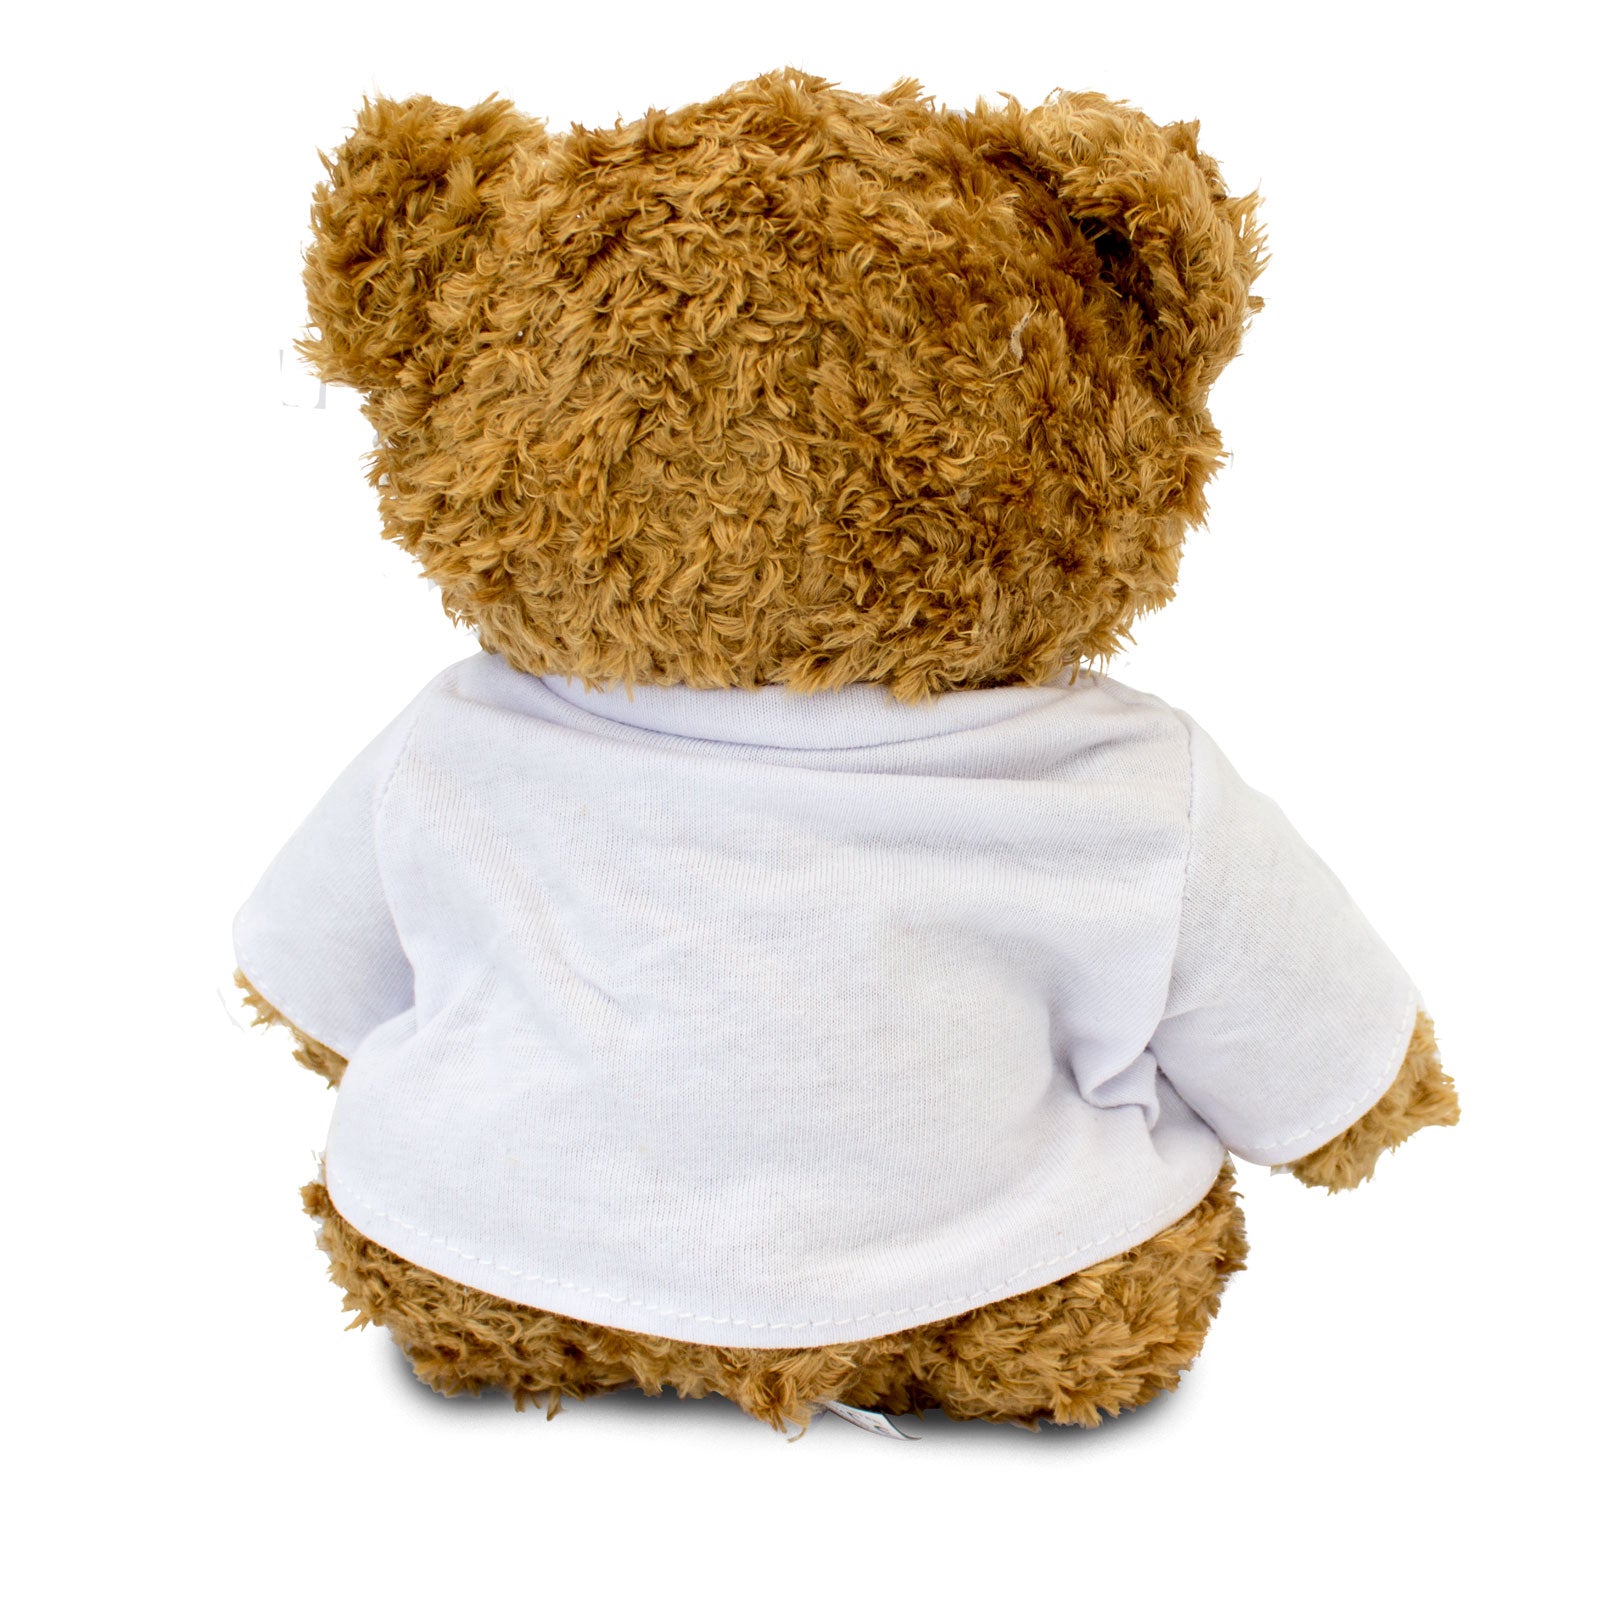 Custom Message Personalised Teddy Bear - Gift Present